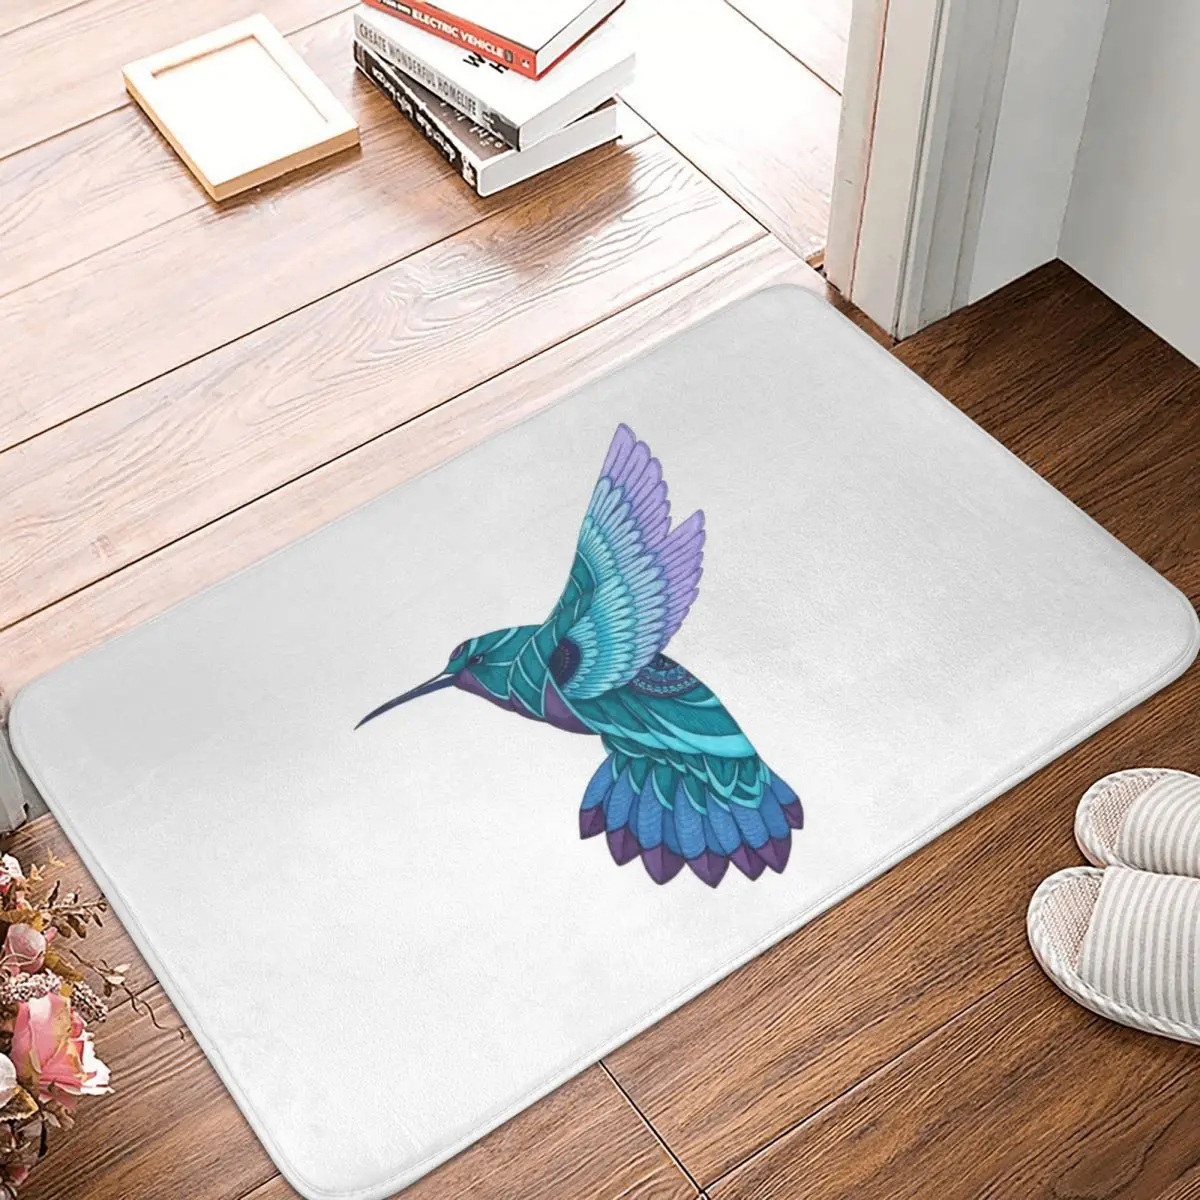 

Hummingbird Doormat Carpet Mat Rug Polyester PVC Anti-slip Floor Decor Bath Bathroom Kitchen Bedroom 40x60